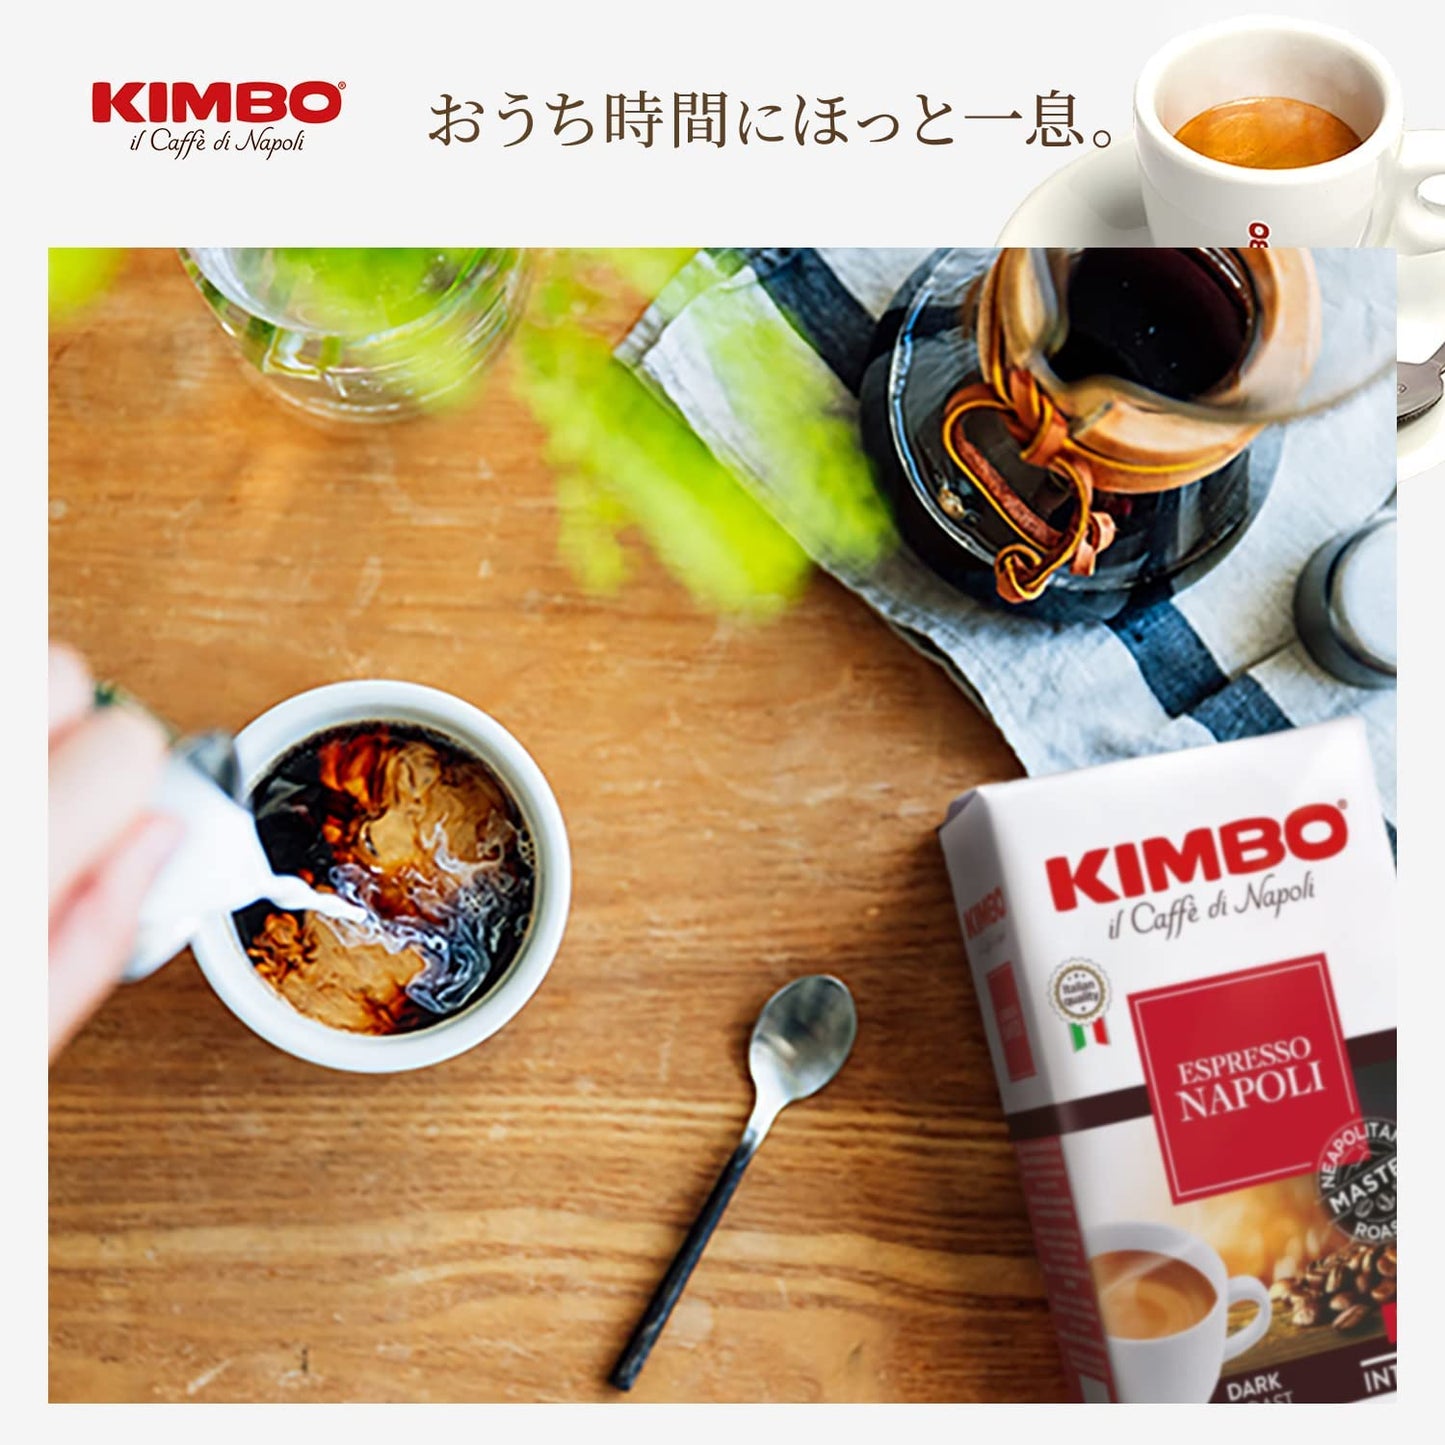 Kimbo Top Flavour 100% Arabica 1kg Italian Coffee Beans